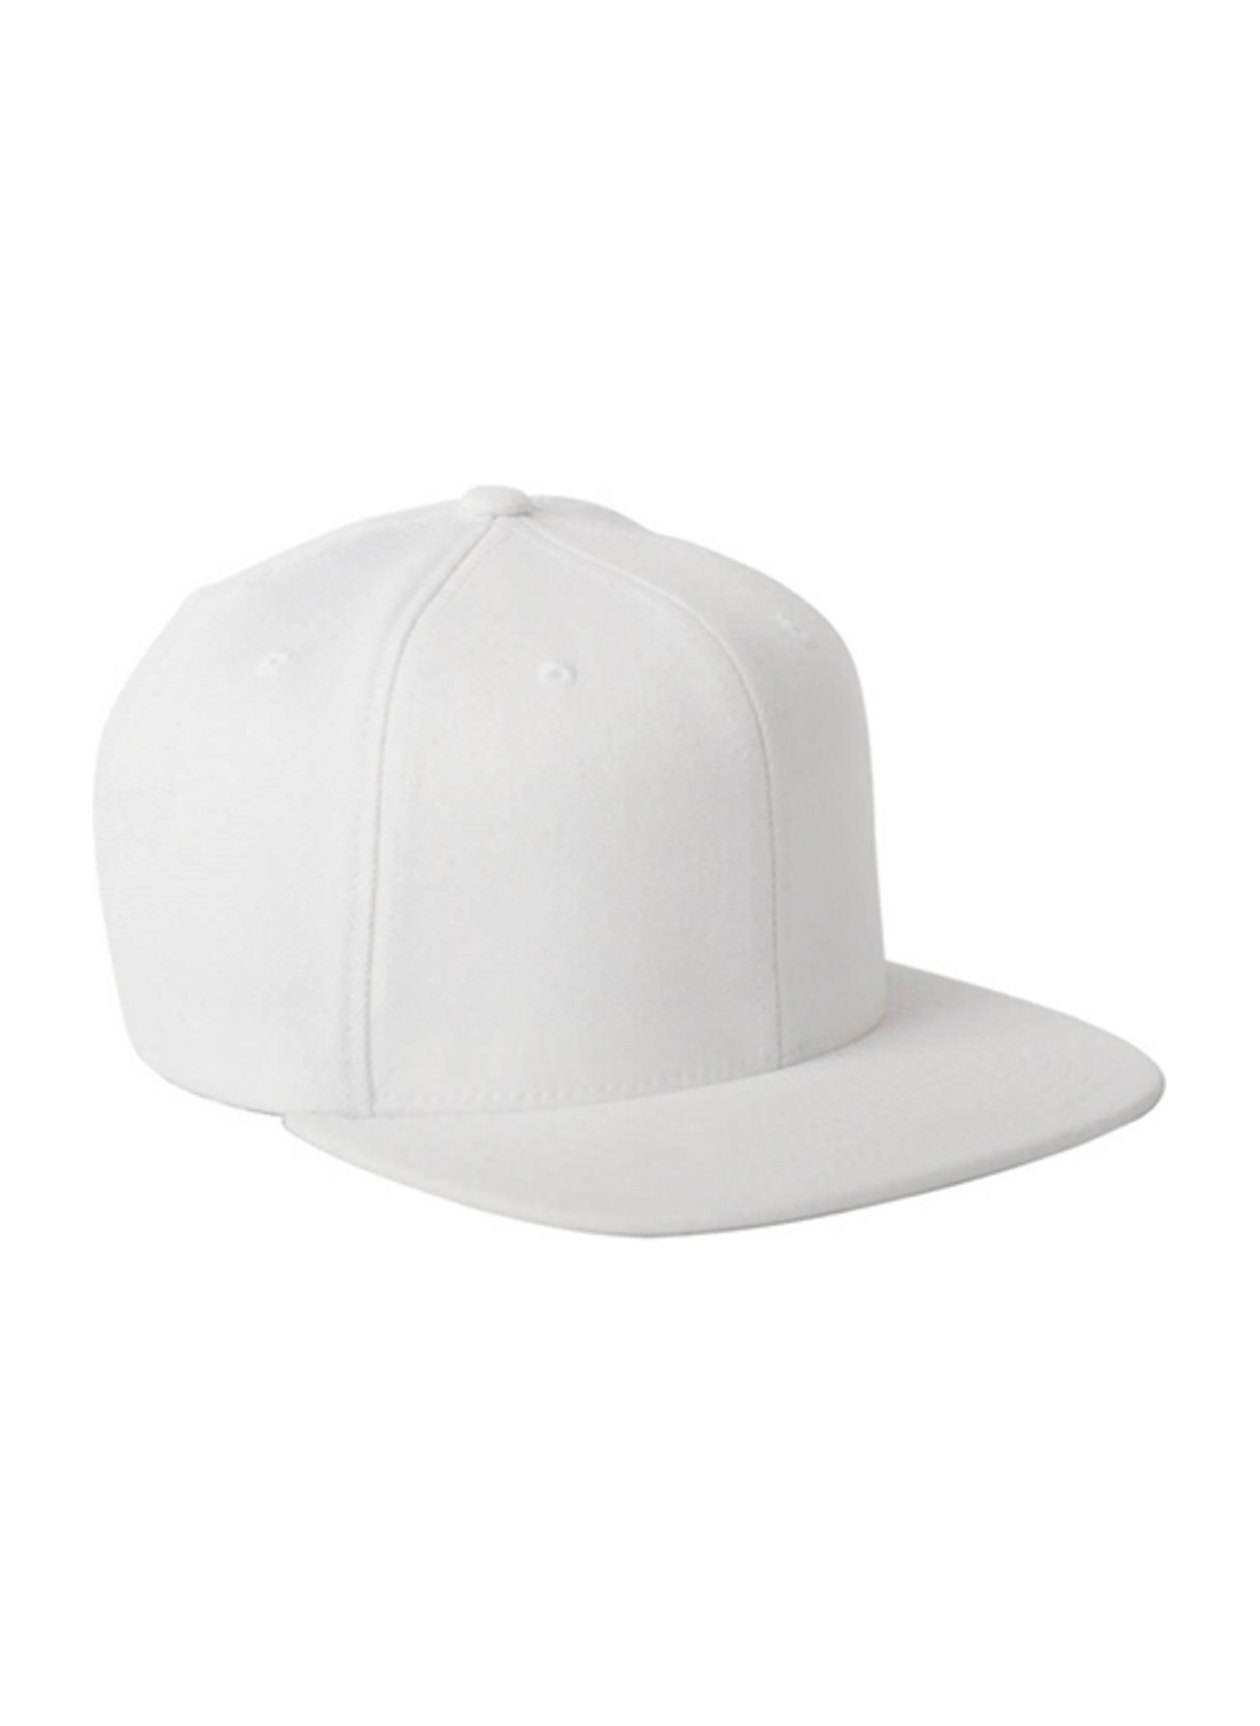 Flexfit White Wool Blend Snapback Hat